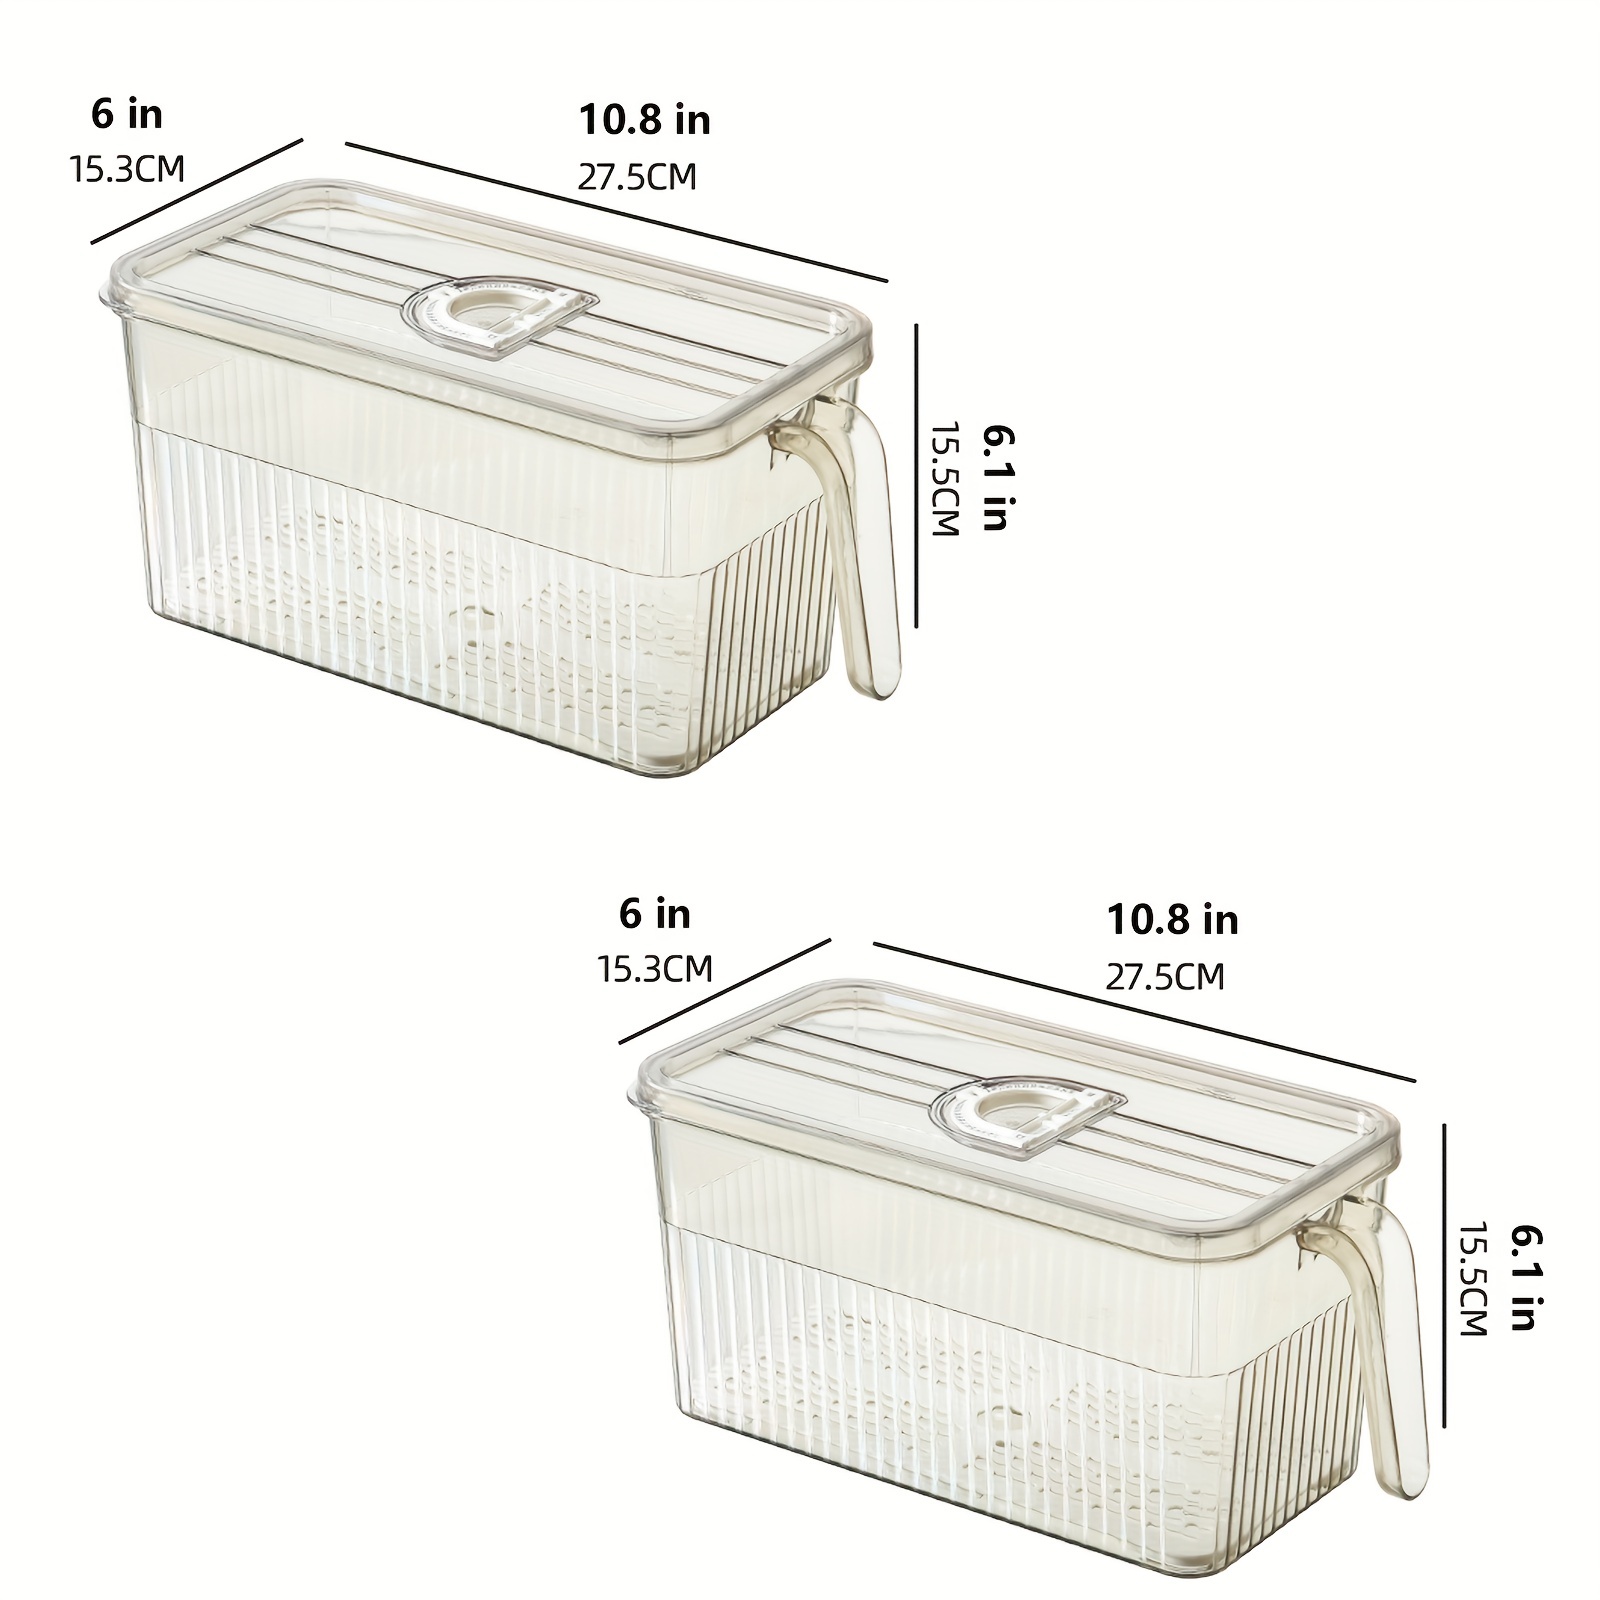 Timing Refrigerator Fresh-keeping Box With Handle, Organizer Bins